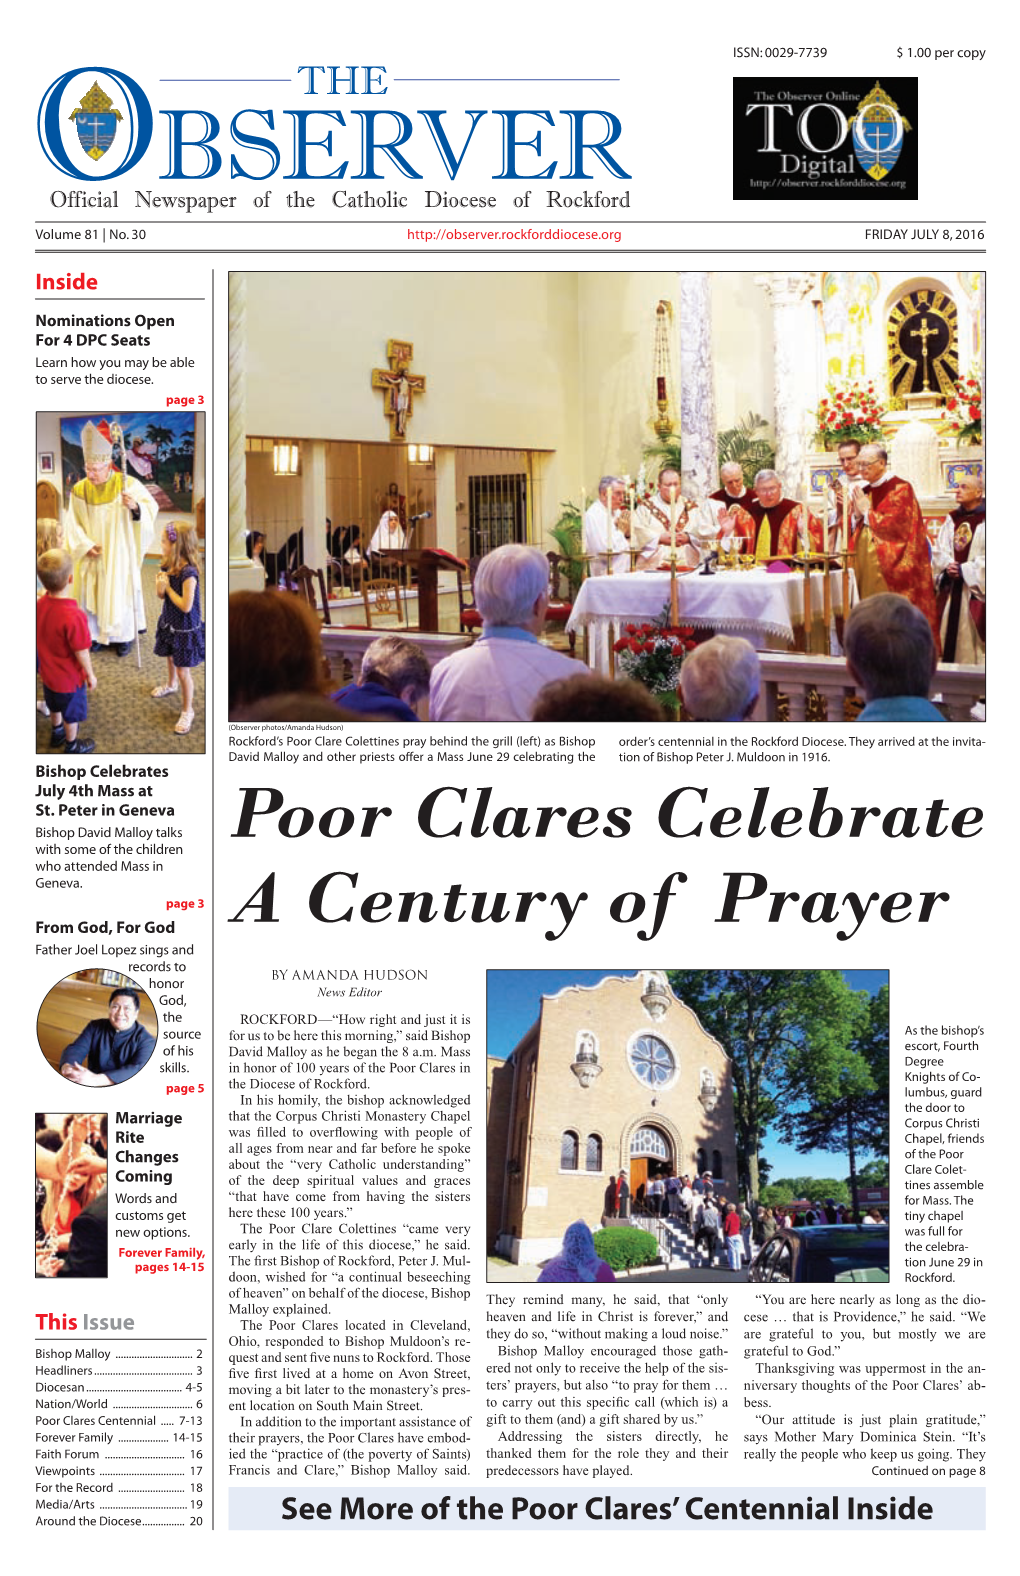 Poor Clares Celebrate a Century of Prayer